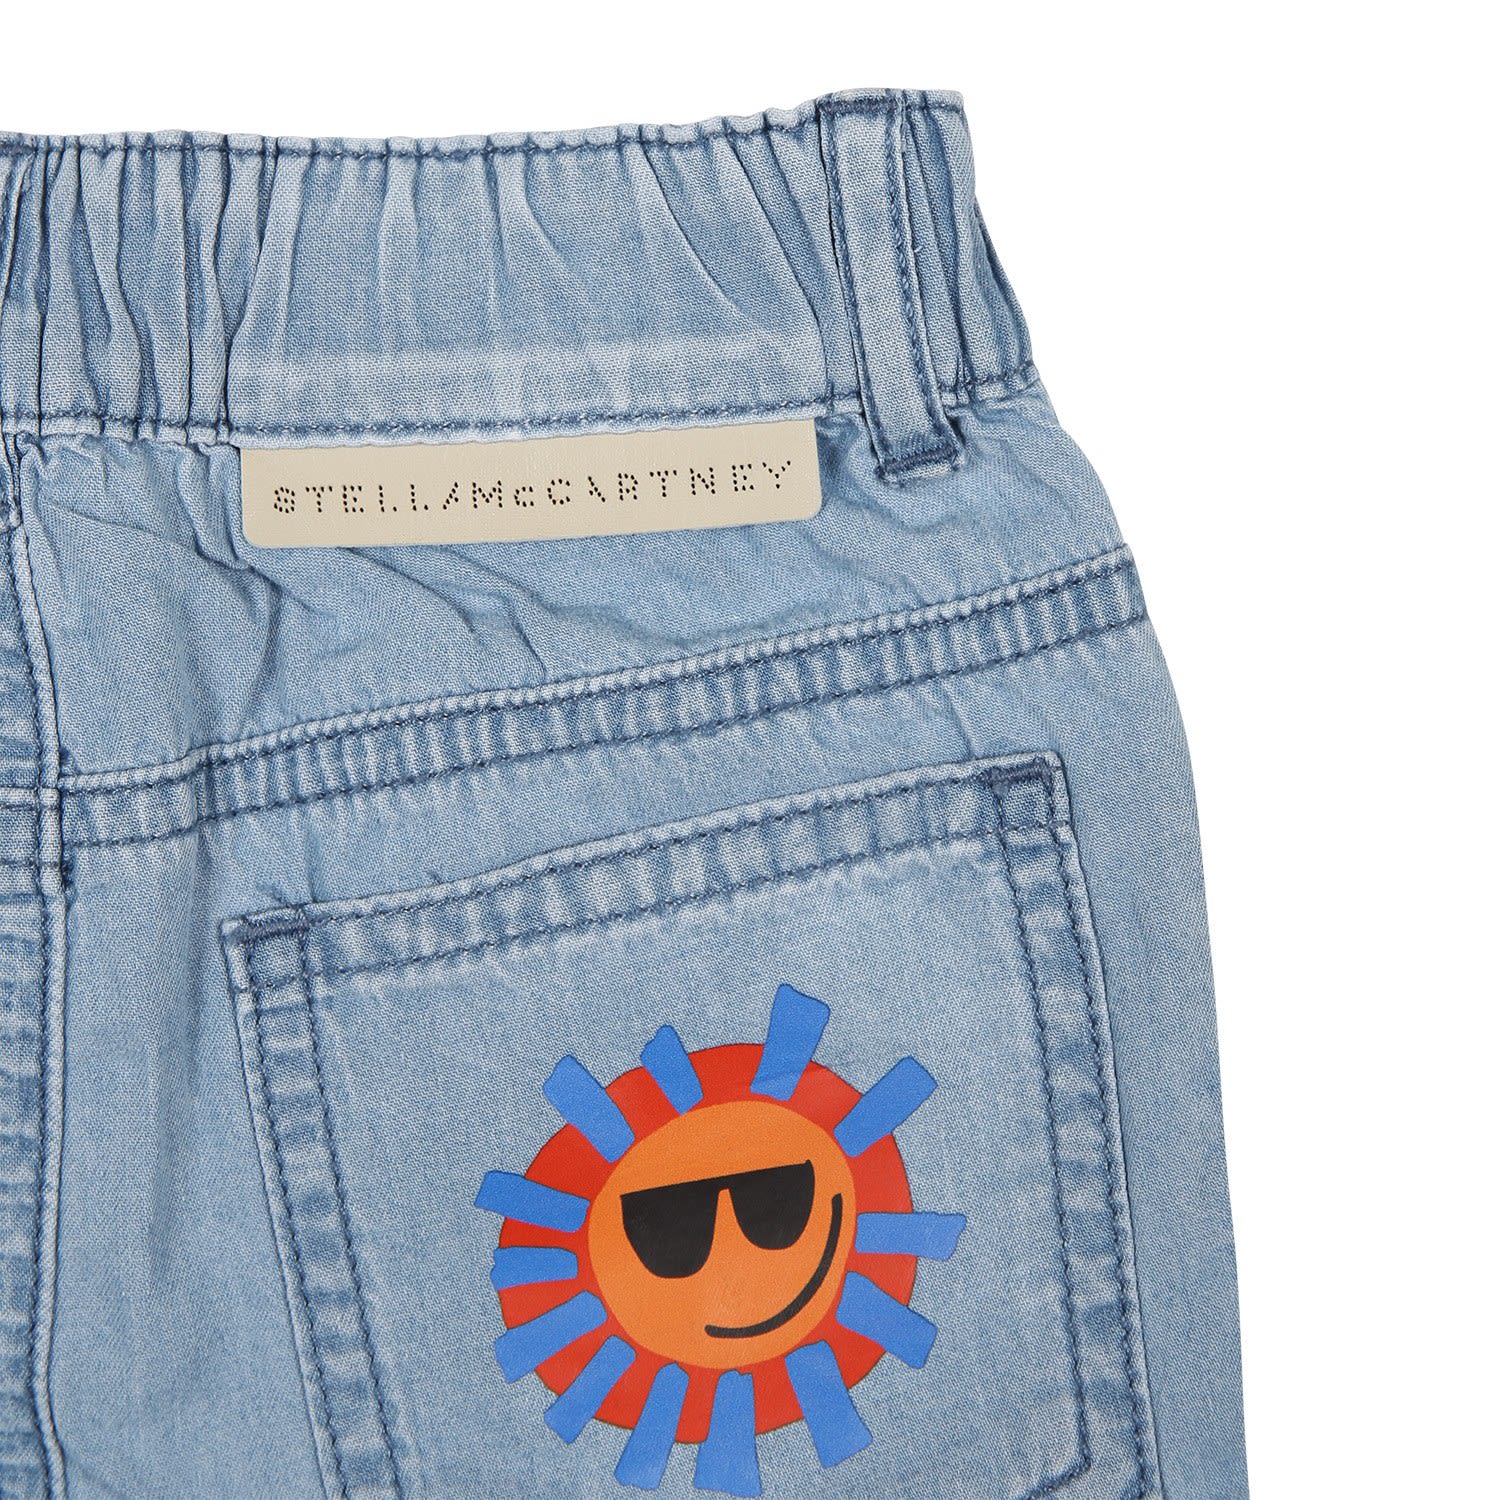 Shop Stella Mccartney Denim Shorts For Baby Boy With Multicolor Sun